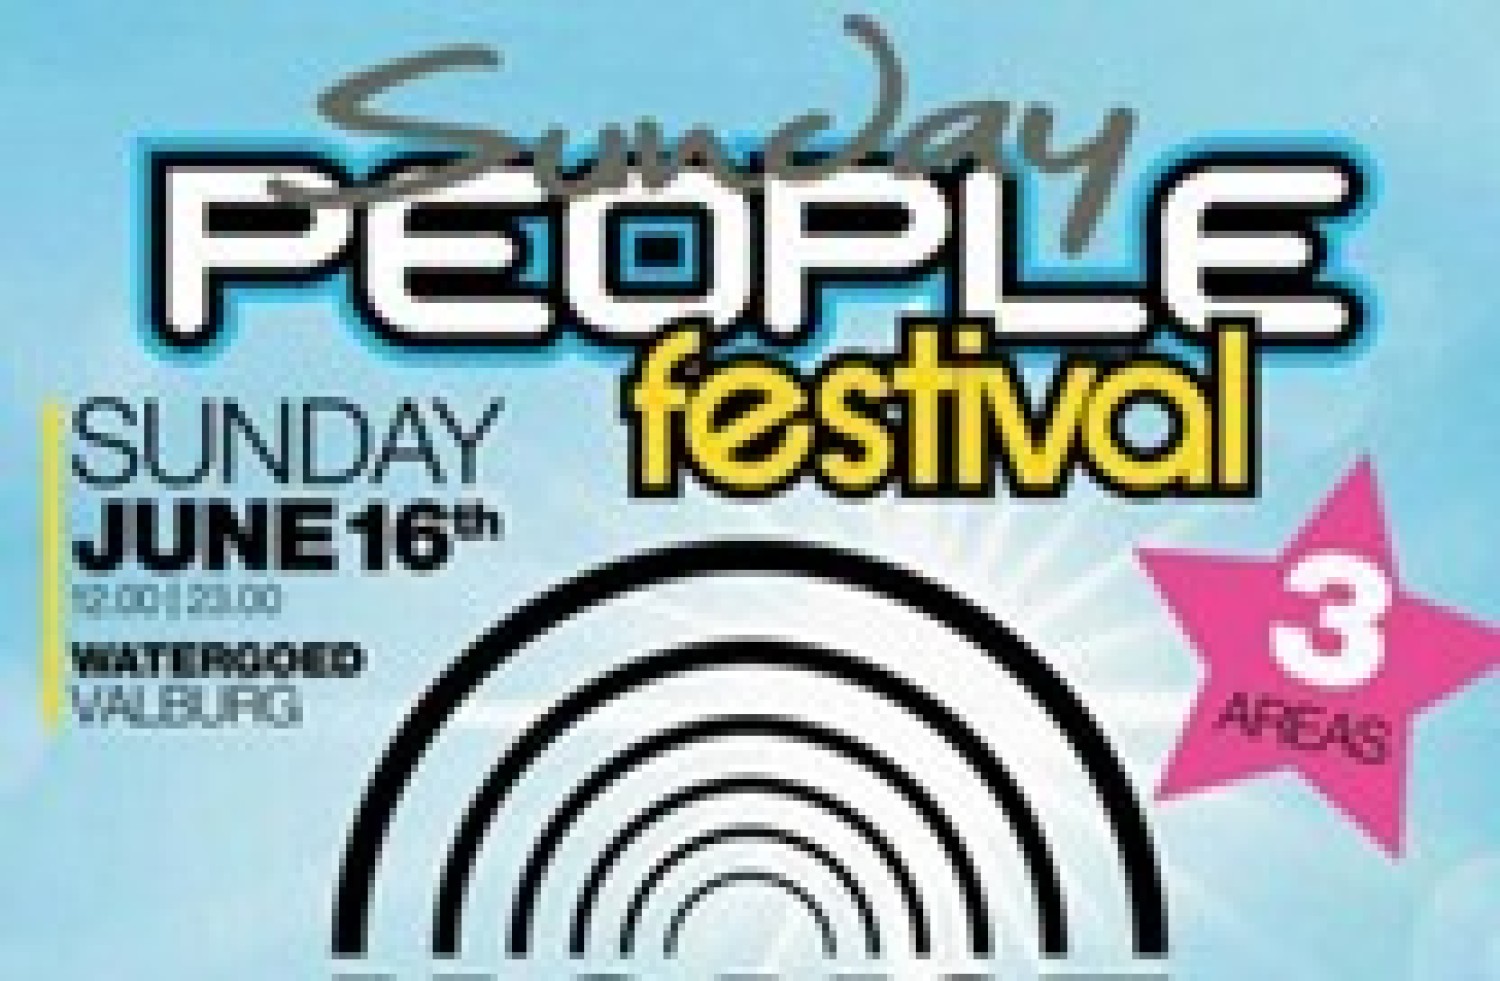 Party report: Sundaypeople Festival, Watergoed, 16 juni 2013